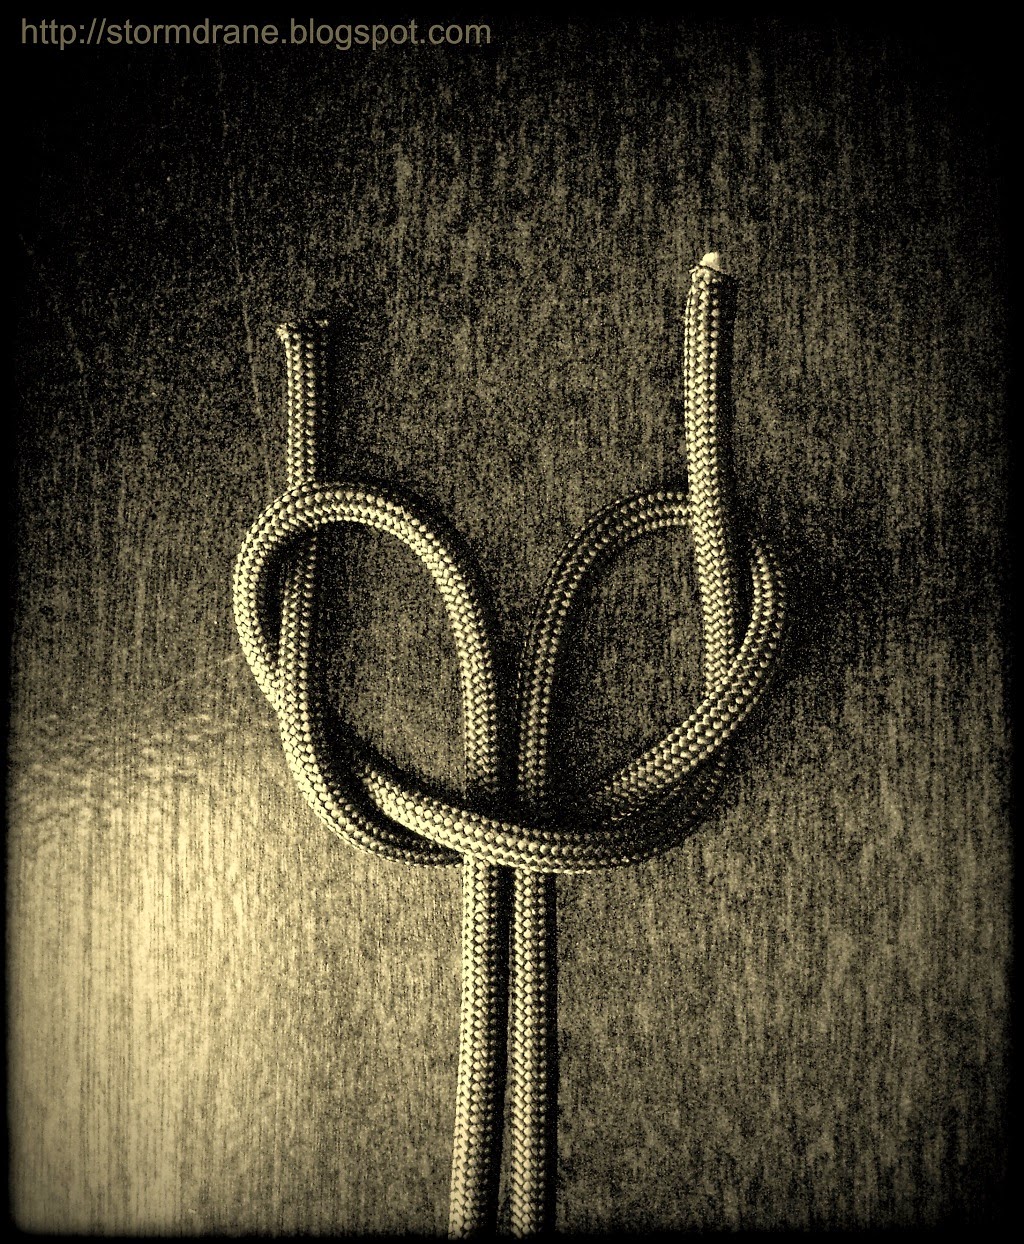 Stormdrane's Blog: ABoK #802, A two-strand lanyard knot